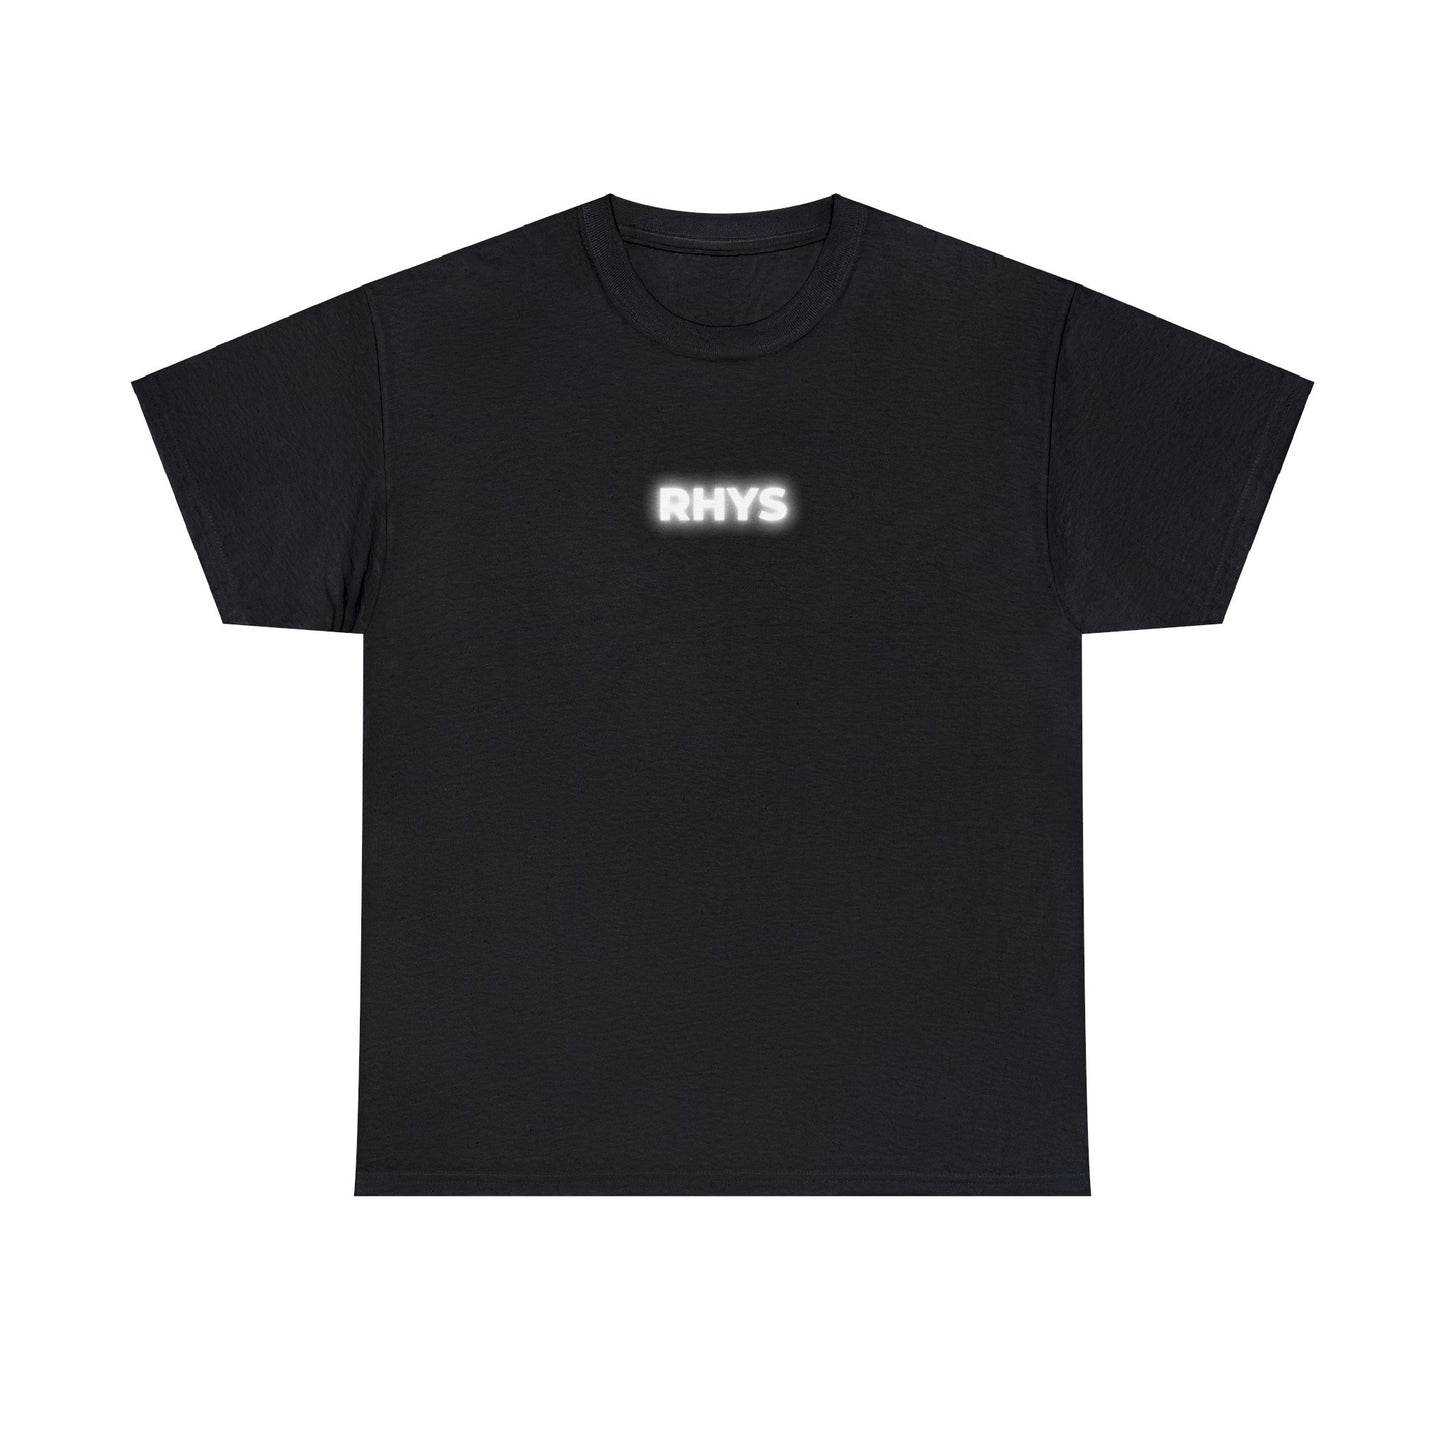 Rhysand T-Shirt, ACOTAR